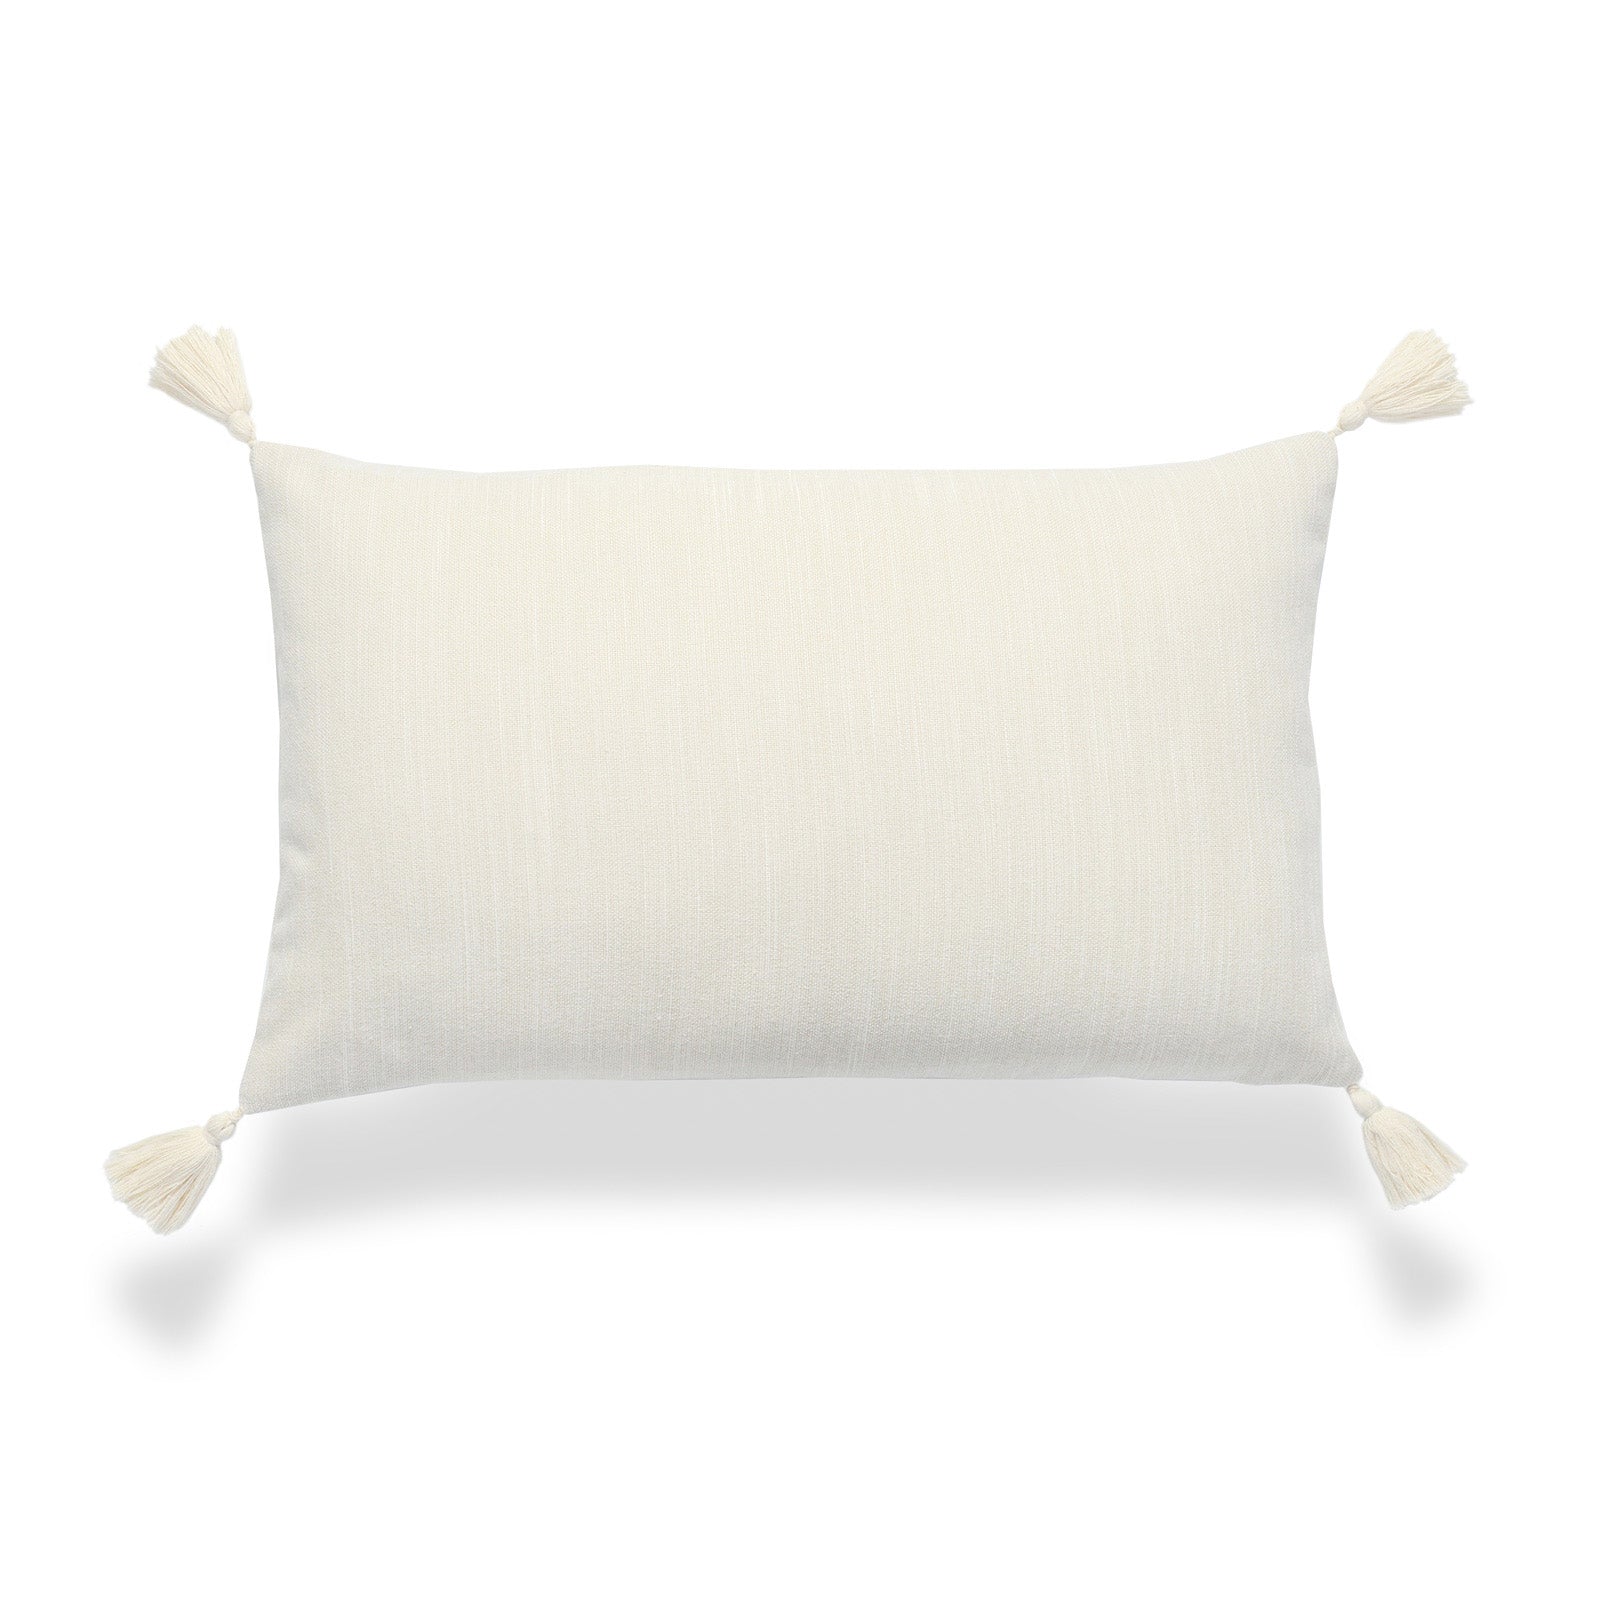 Neutral Lumbar Pillow Cover, Beige Plain With Tassels, 12"x20"